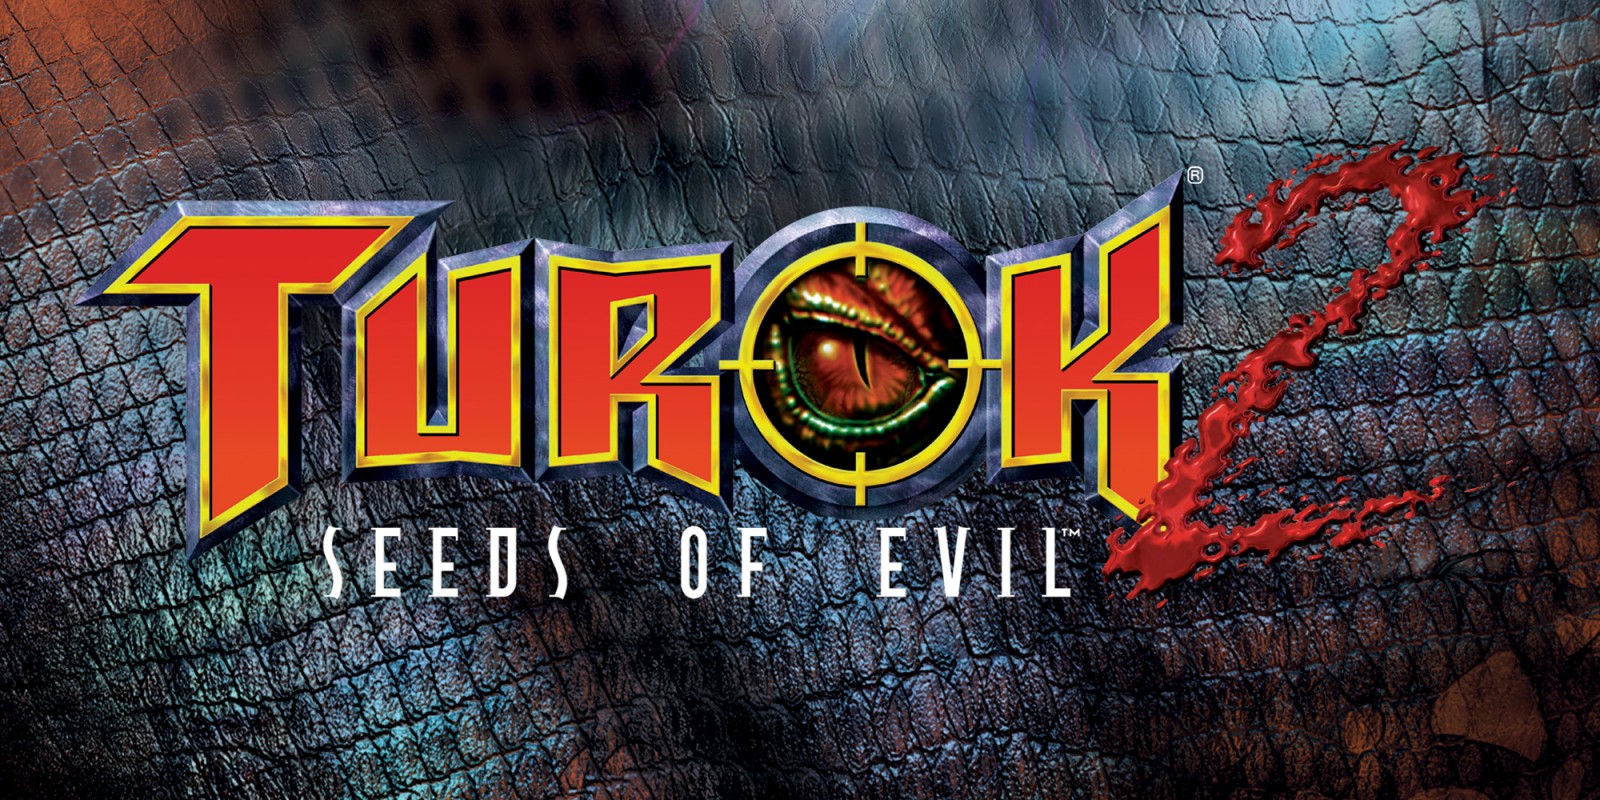 Turok 2: Seeds of Evil free Download PC Game (Full Version)